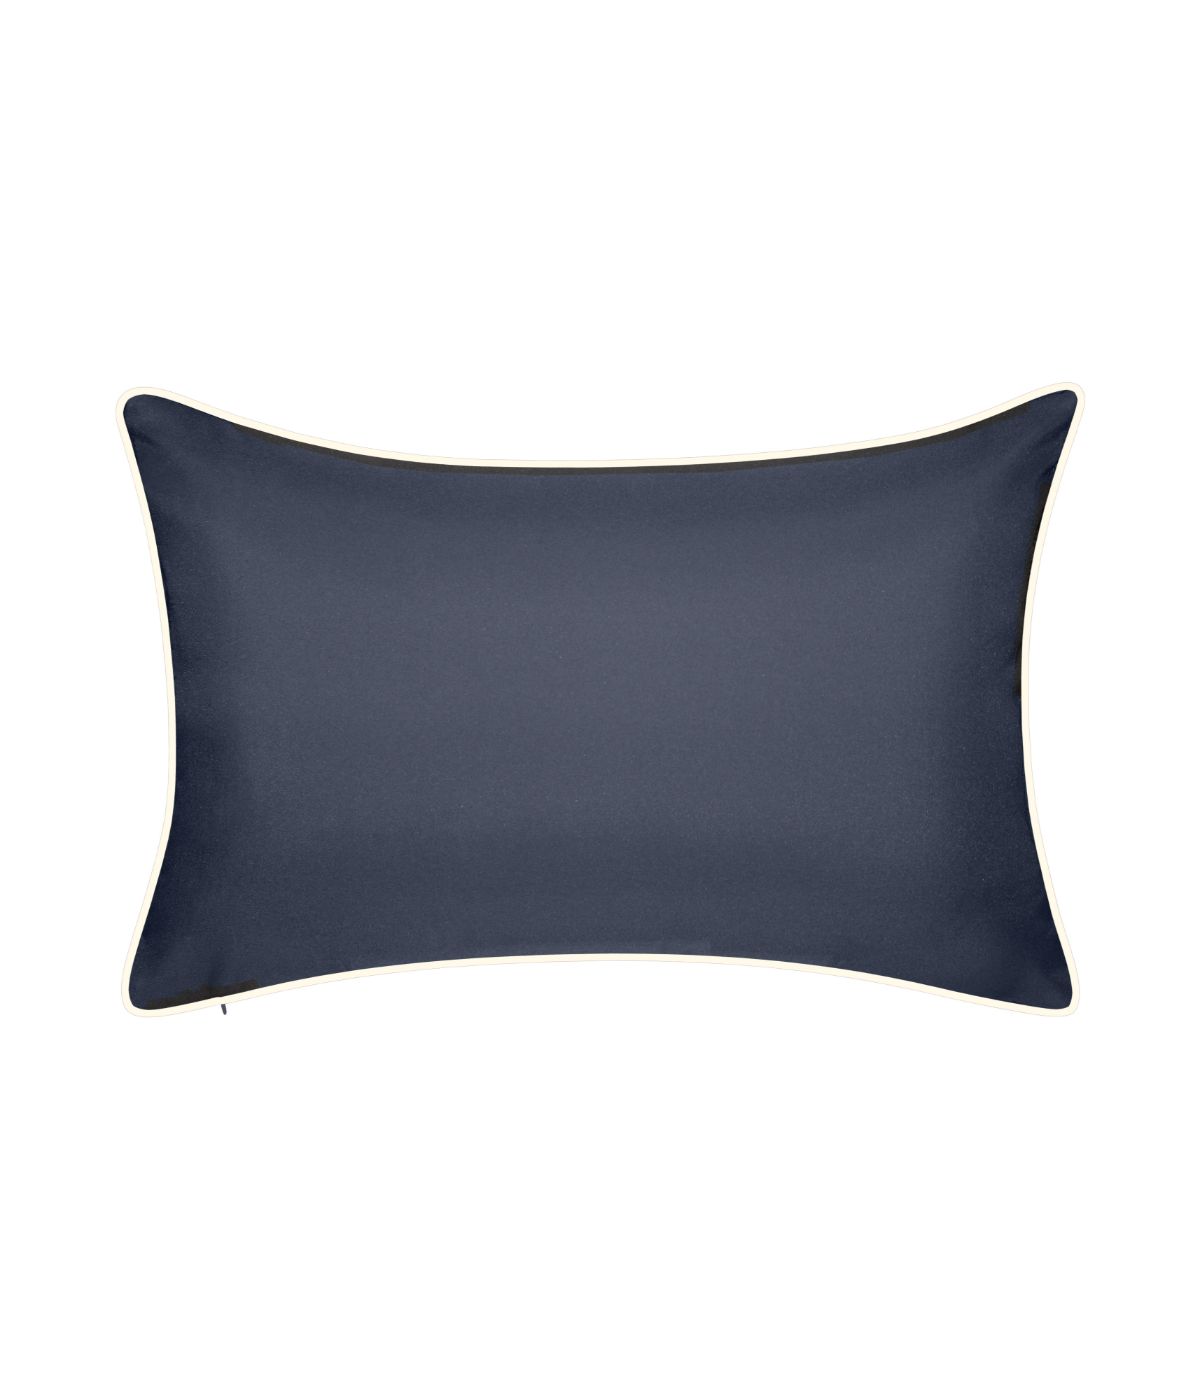 Raffia Geometric Embroidery Decorative Lumbar Pillow White/Navy